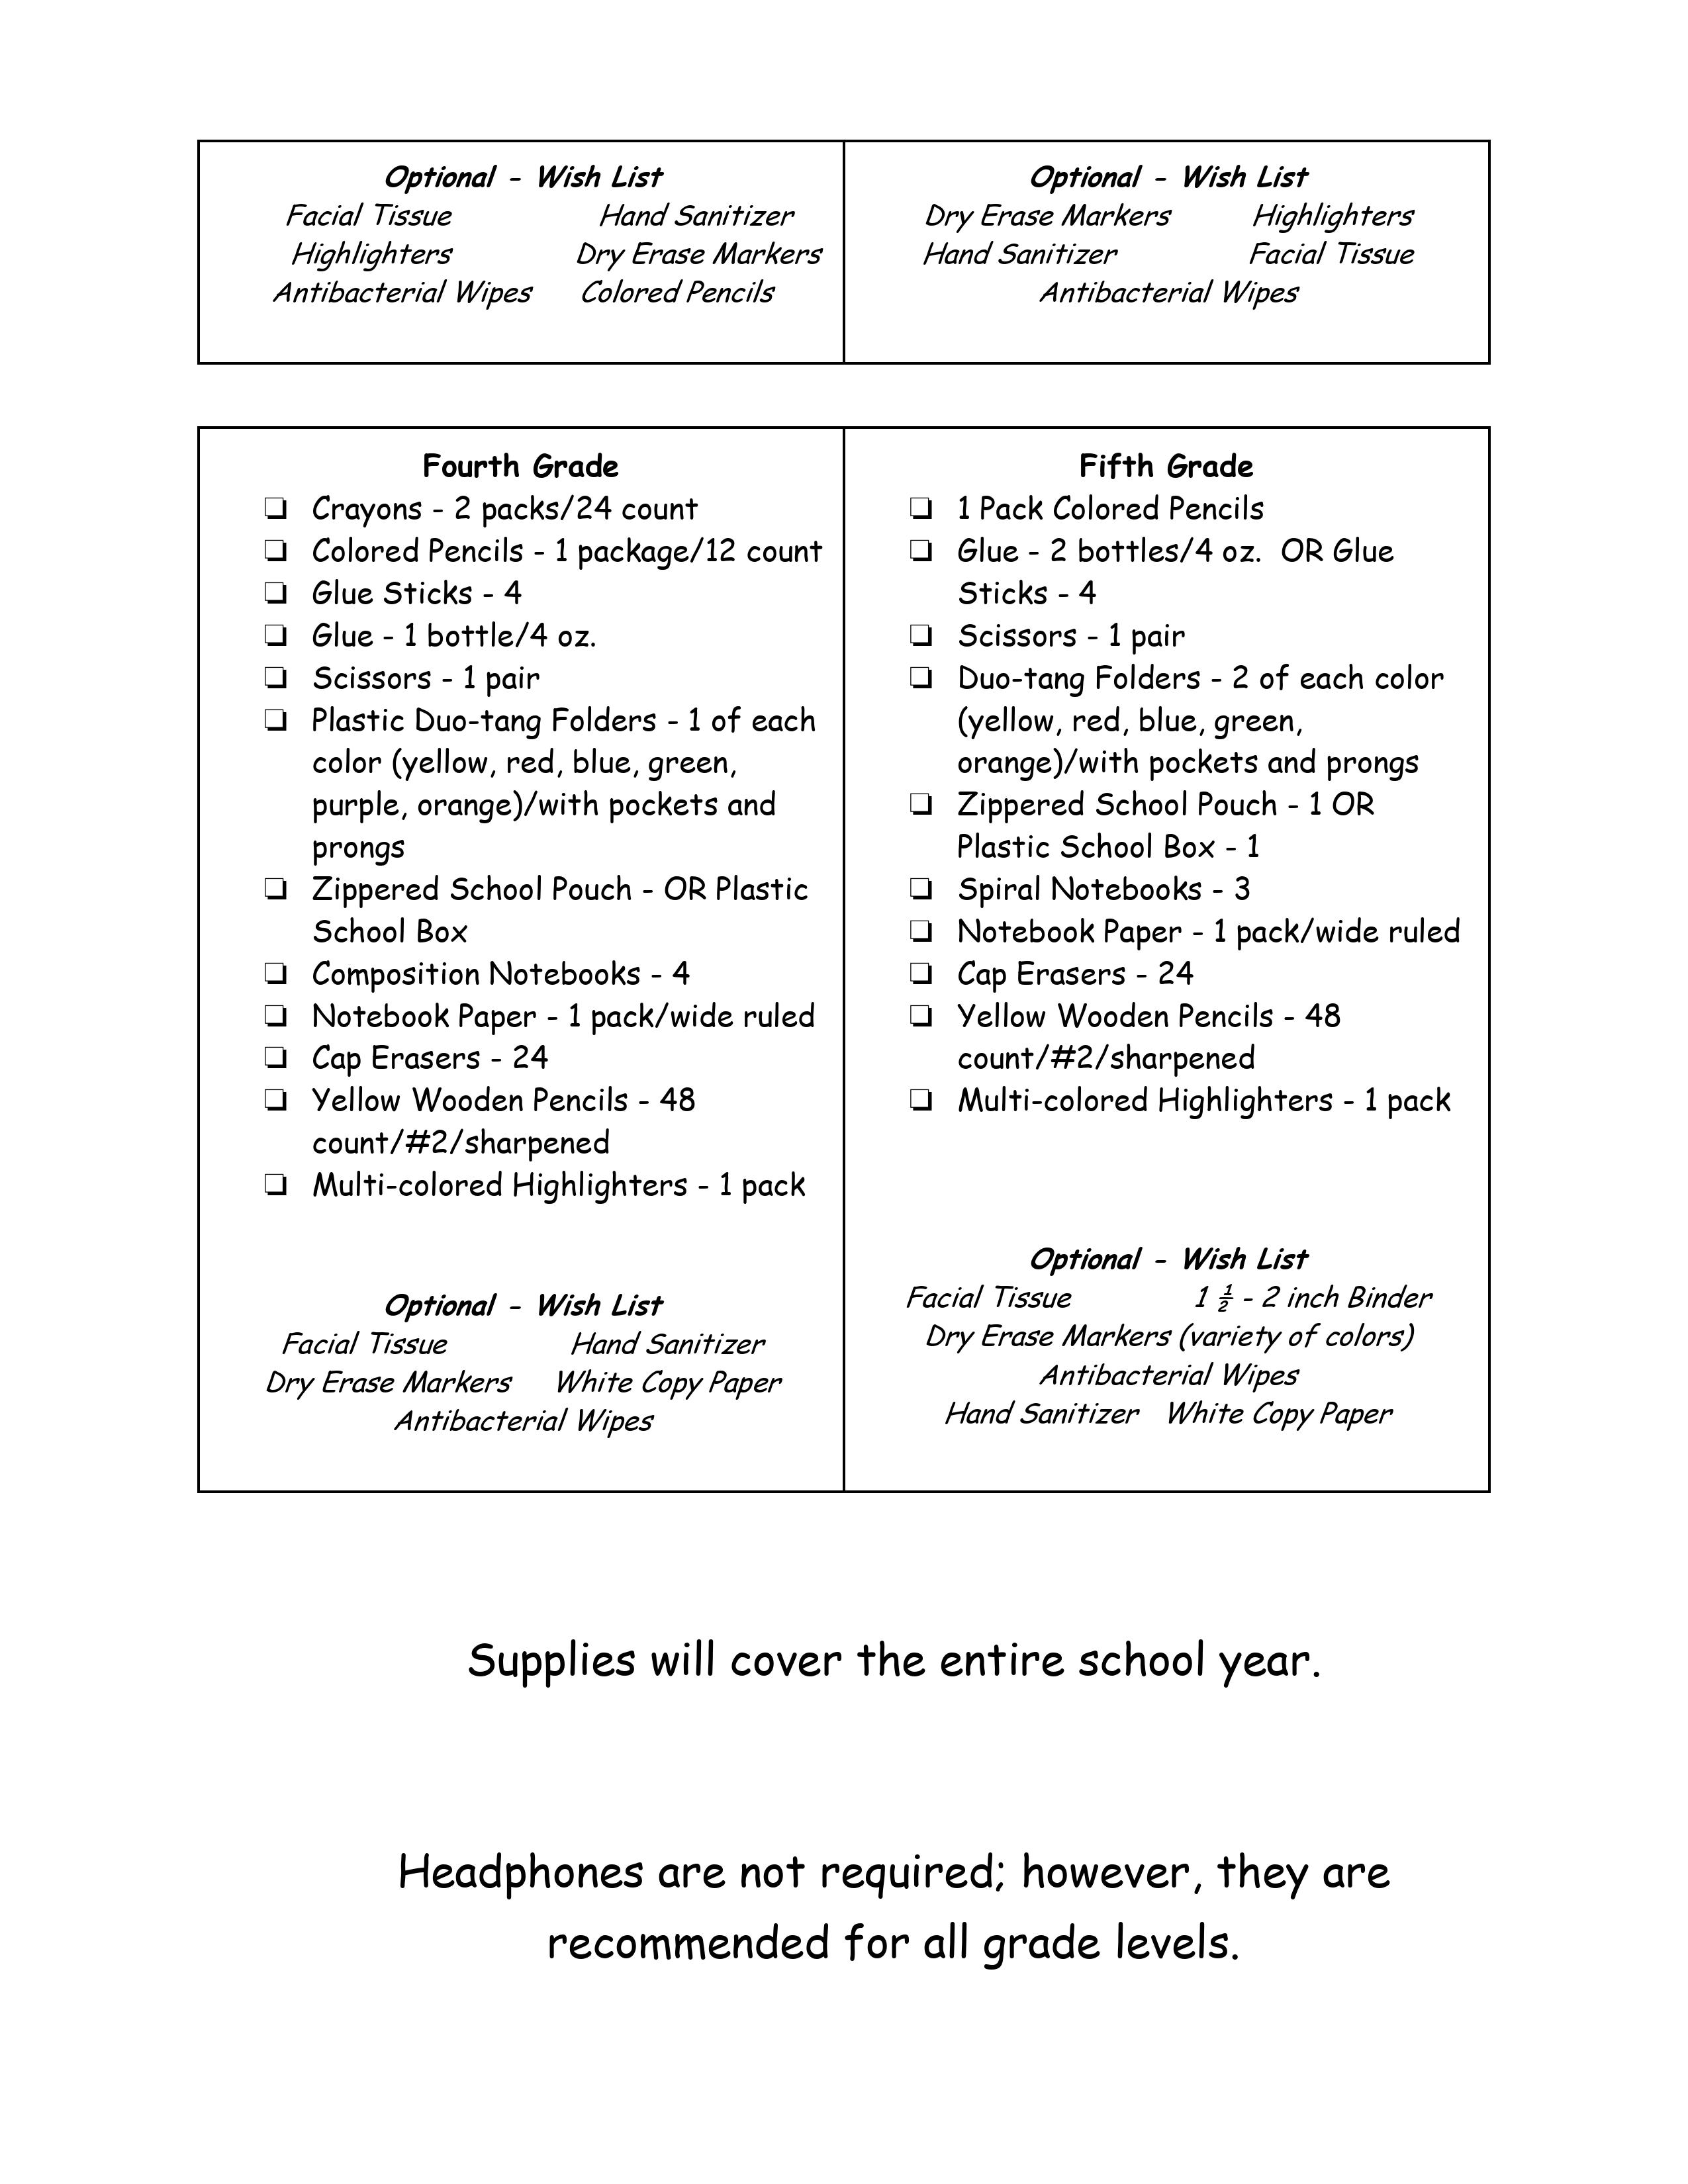 School Supply List Grades 4-5